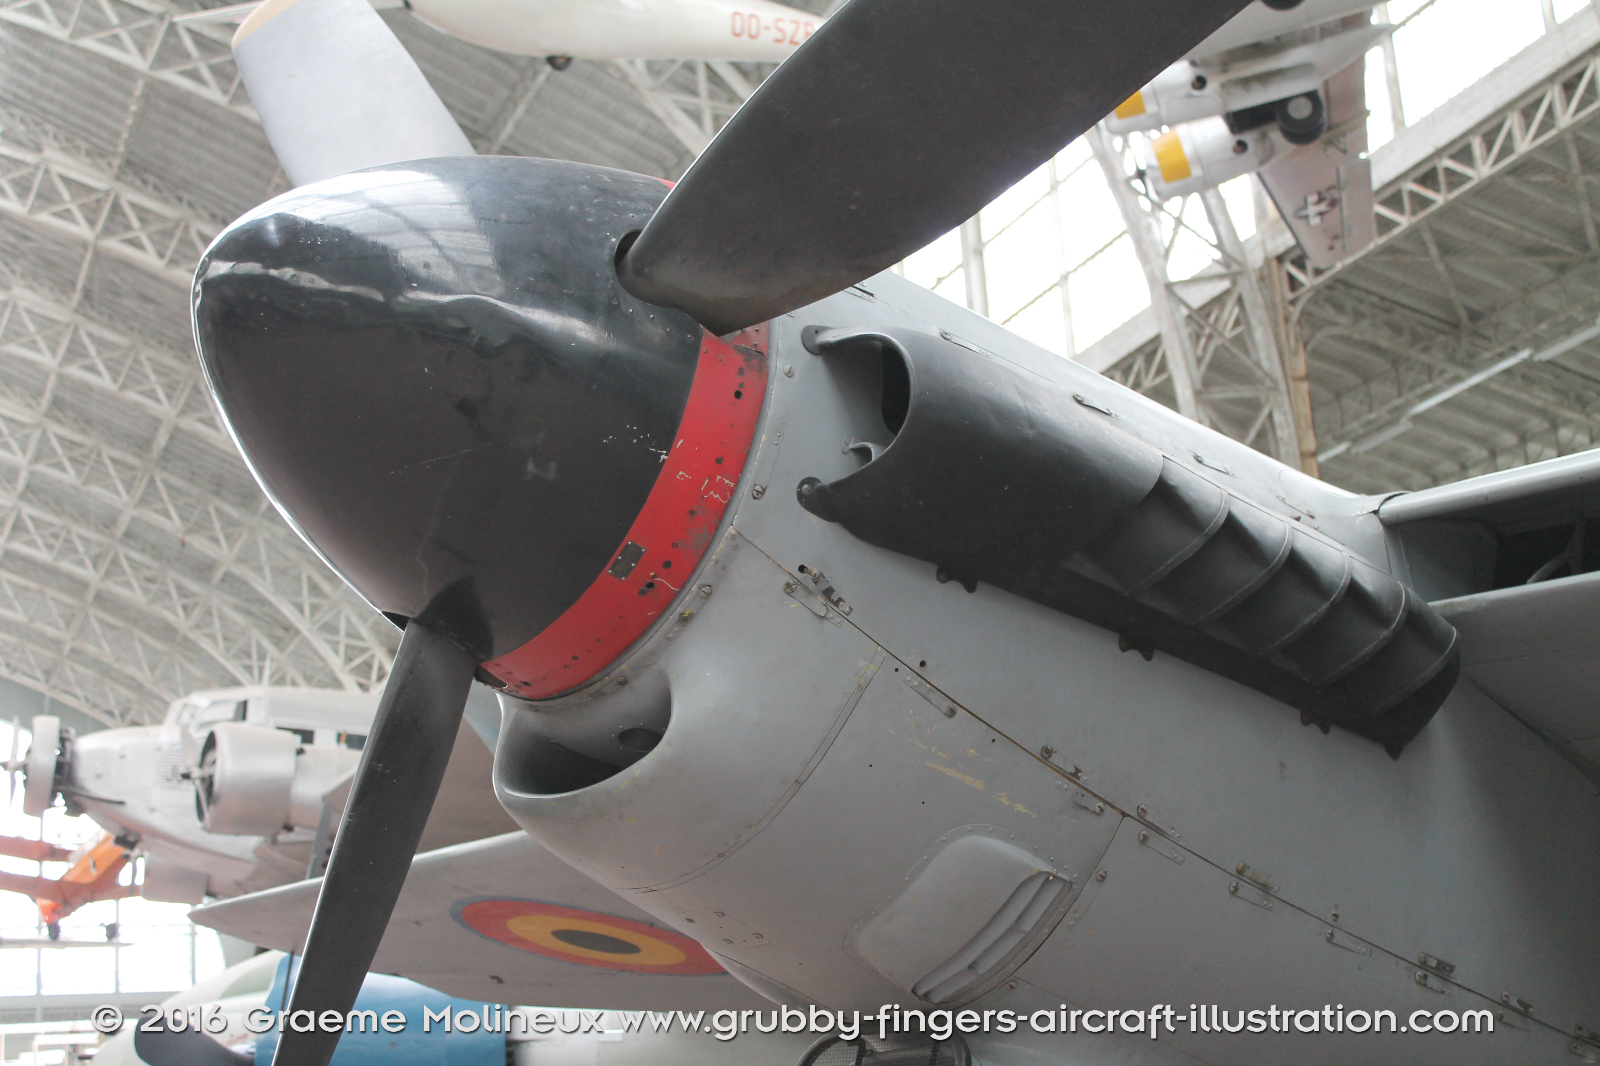 de_Havilland_Mosquito_Walkaround_Mk30_MB-42_Belgian_Air_Force_Museum_2015_15_GraemeMolineux